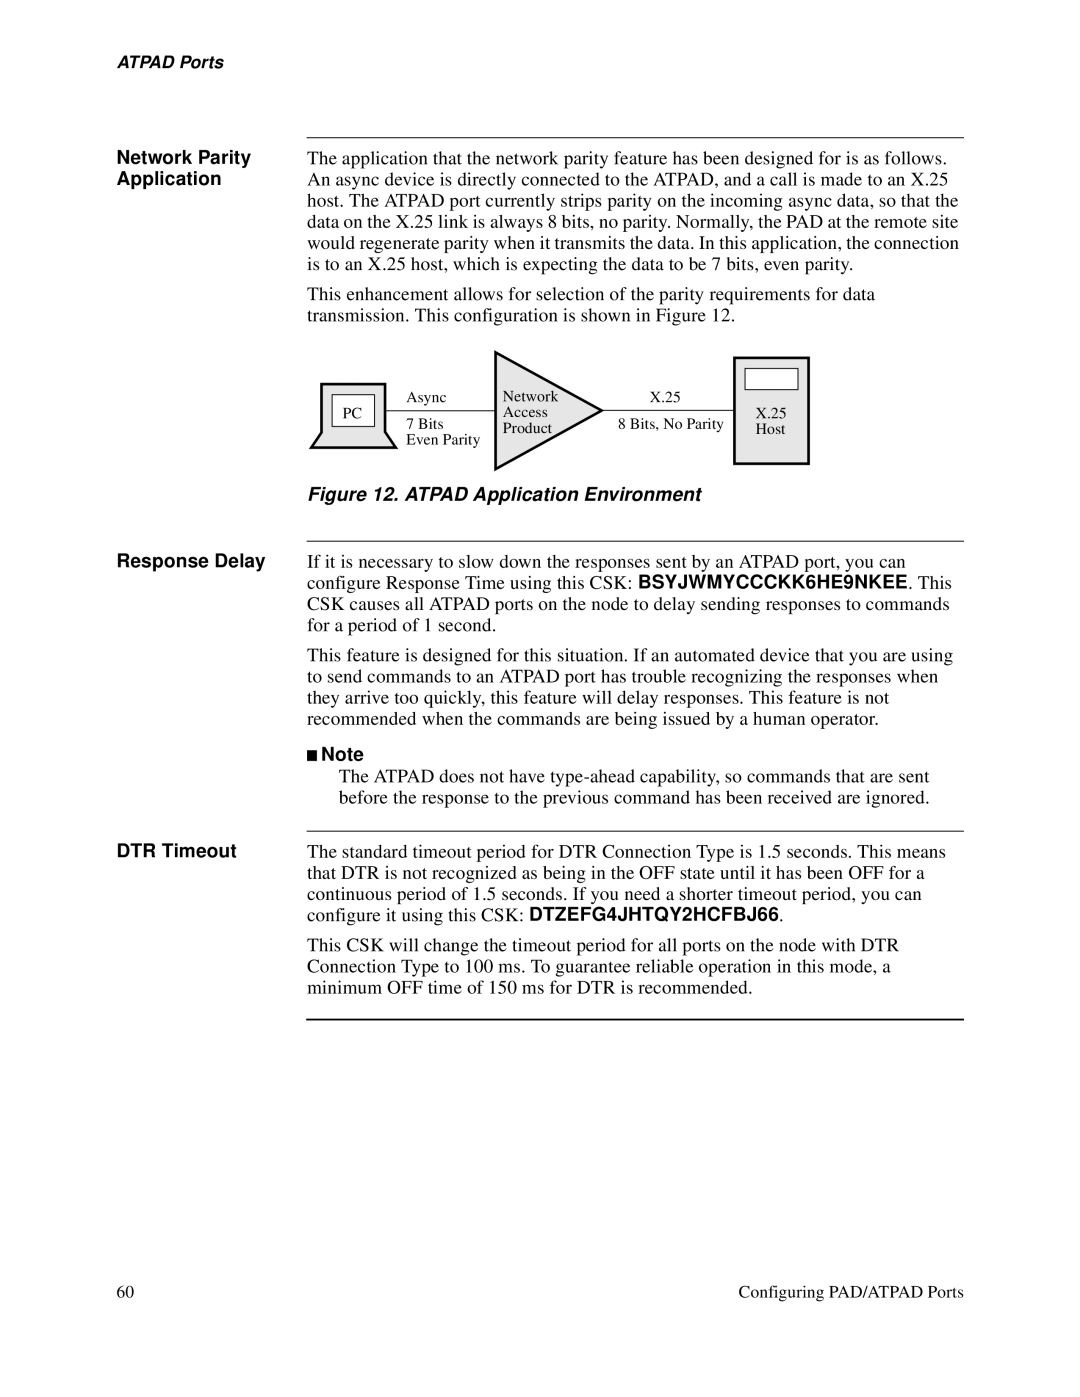 3Com S200 manual Network Parity Application Response Delay DTR Timeout, ATPAD Application Environment 